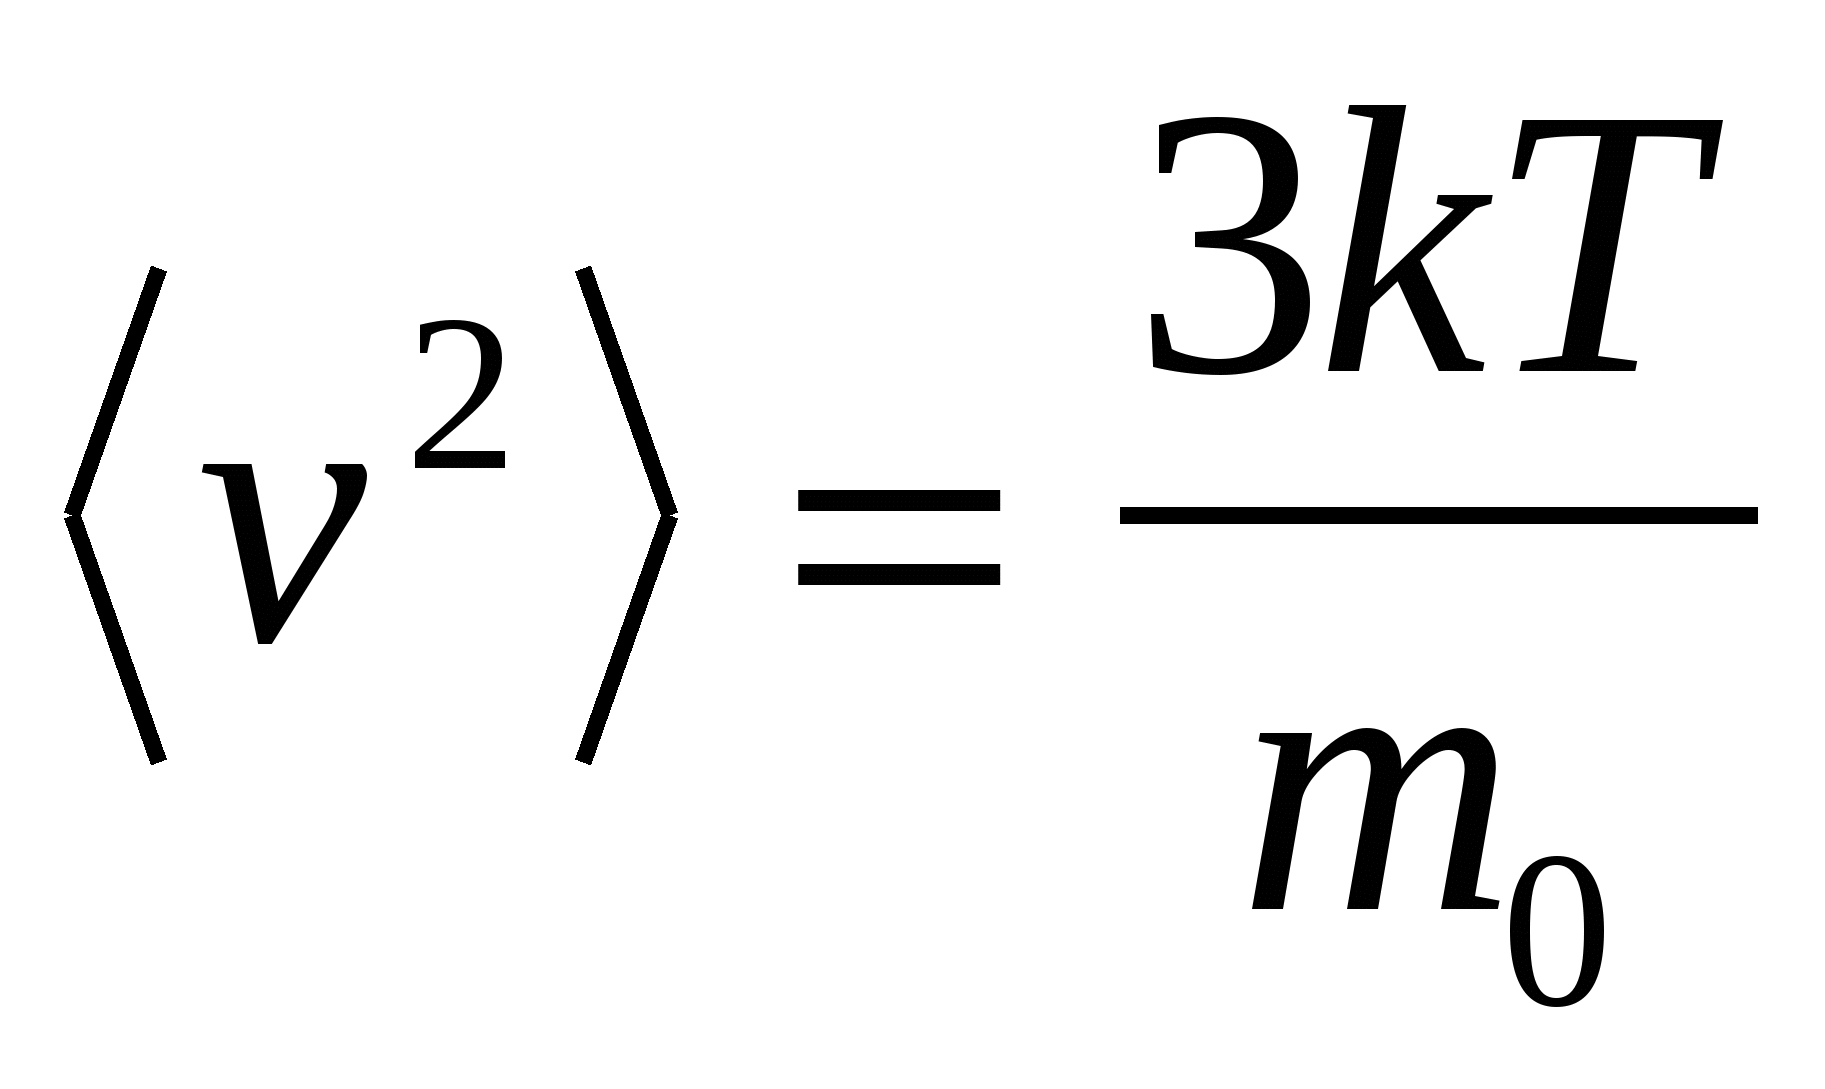 Среднеквадратичная скорость формула. Формула среднеквадратичной скорости движения молекул. Средний квадрат скорости молекул формула. Среднеквадратичная скорость молекул формула. Формула средней квадратичной скорости движения молекул газа.